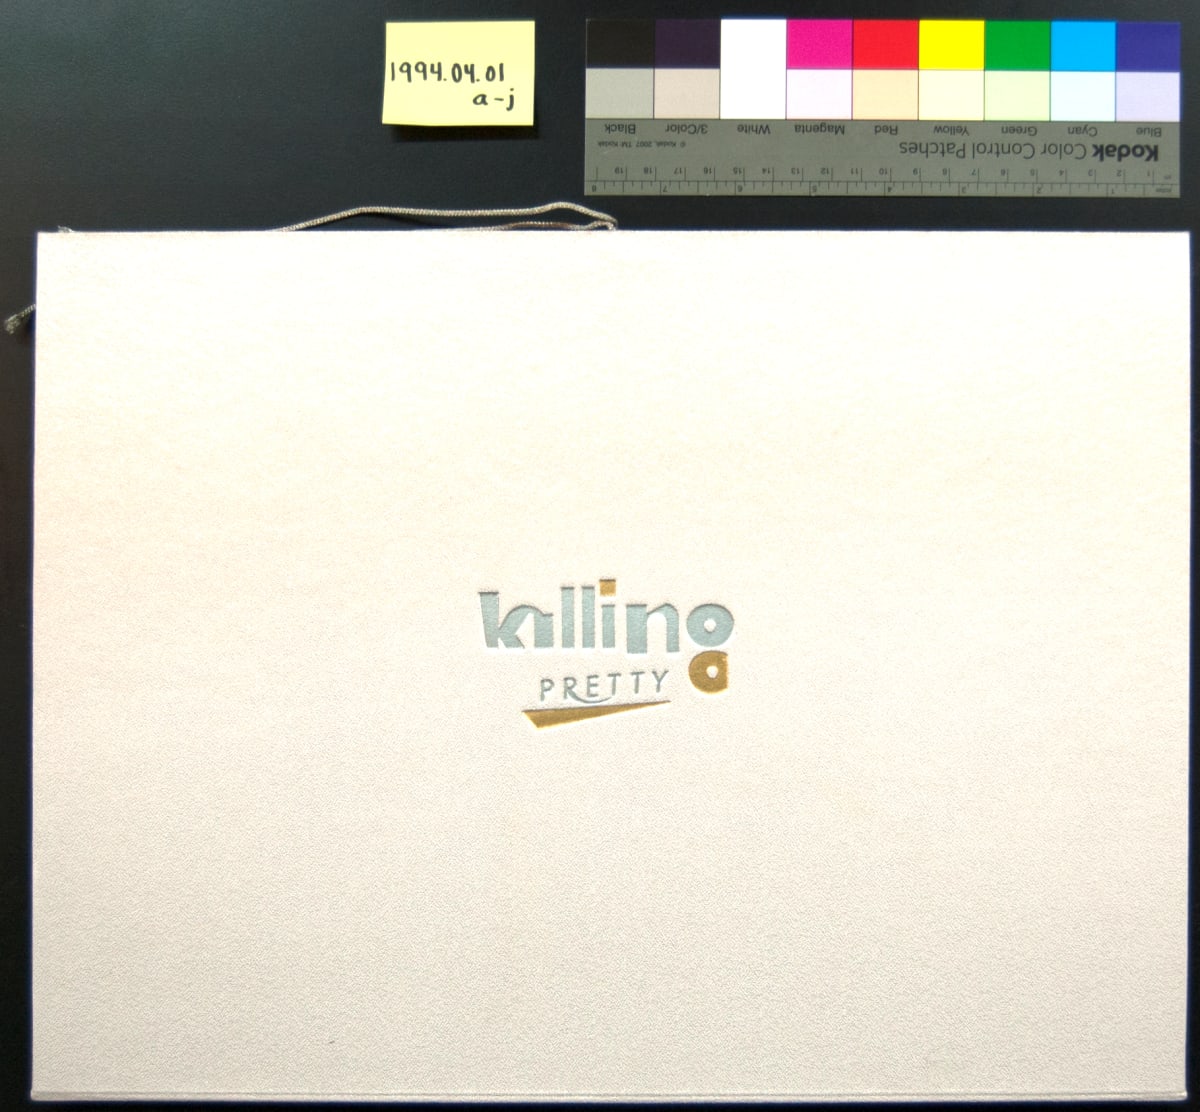 Killing Pretty (portfolio box) by Rick Valicenti 